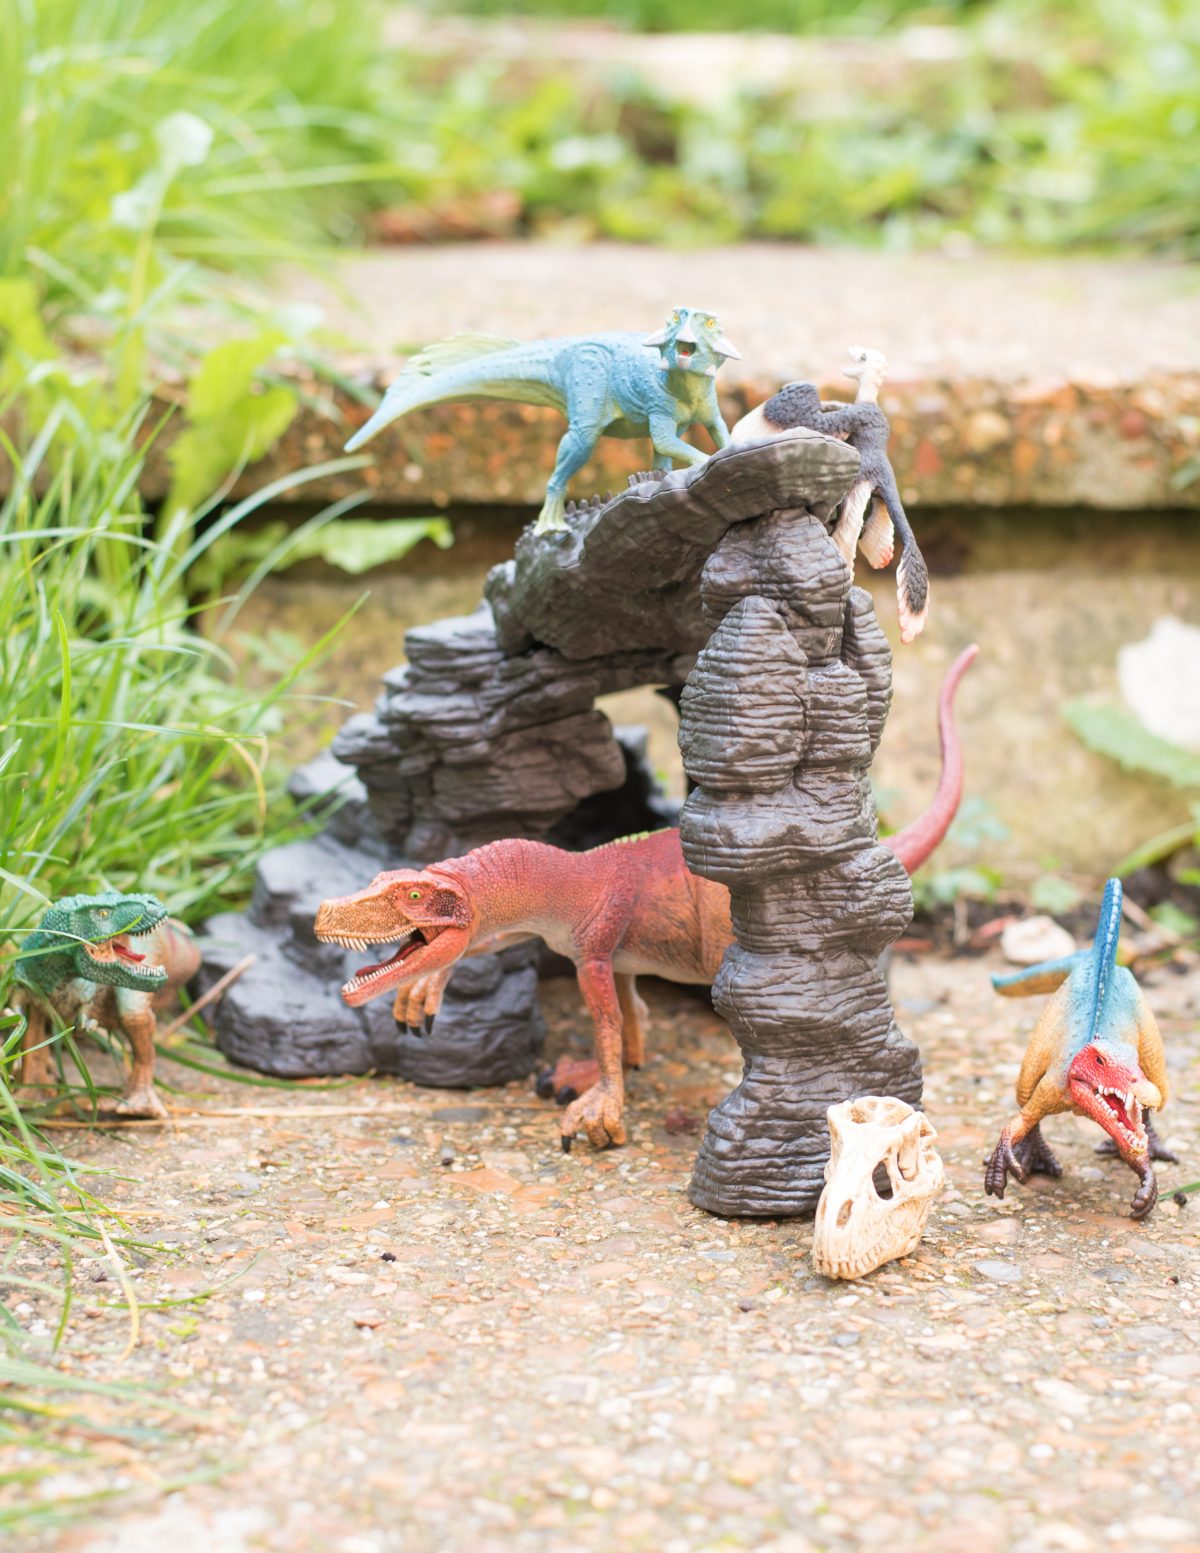 Schleich Dinosaurs Cave Set in the Garden free play dinovember